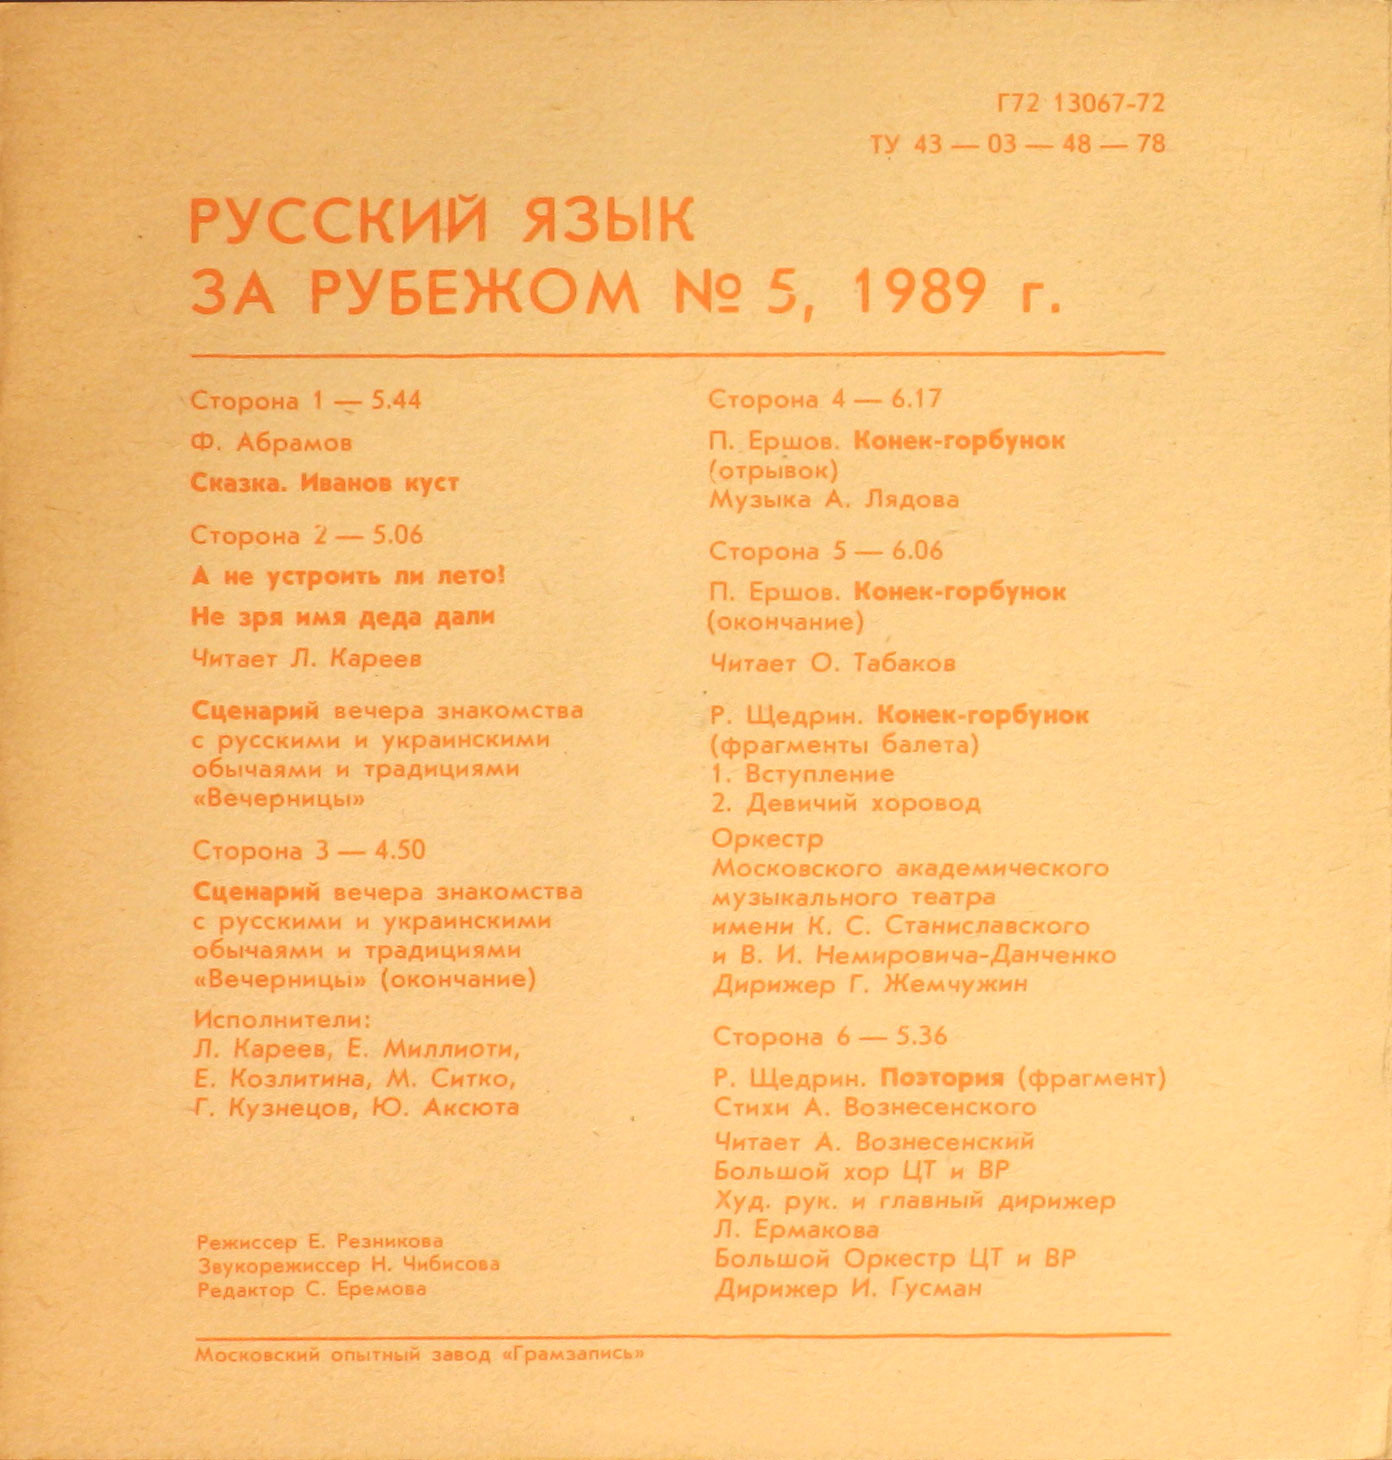 "РУССКИЙ ЯЗЫК ЗА РУБЕЖОМ", № 5 - 1989